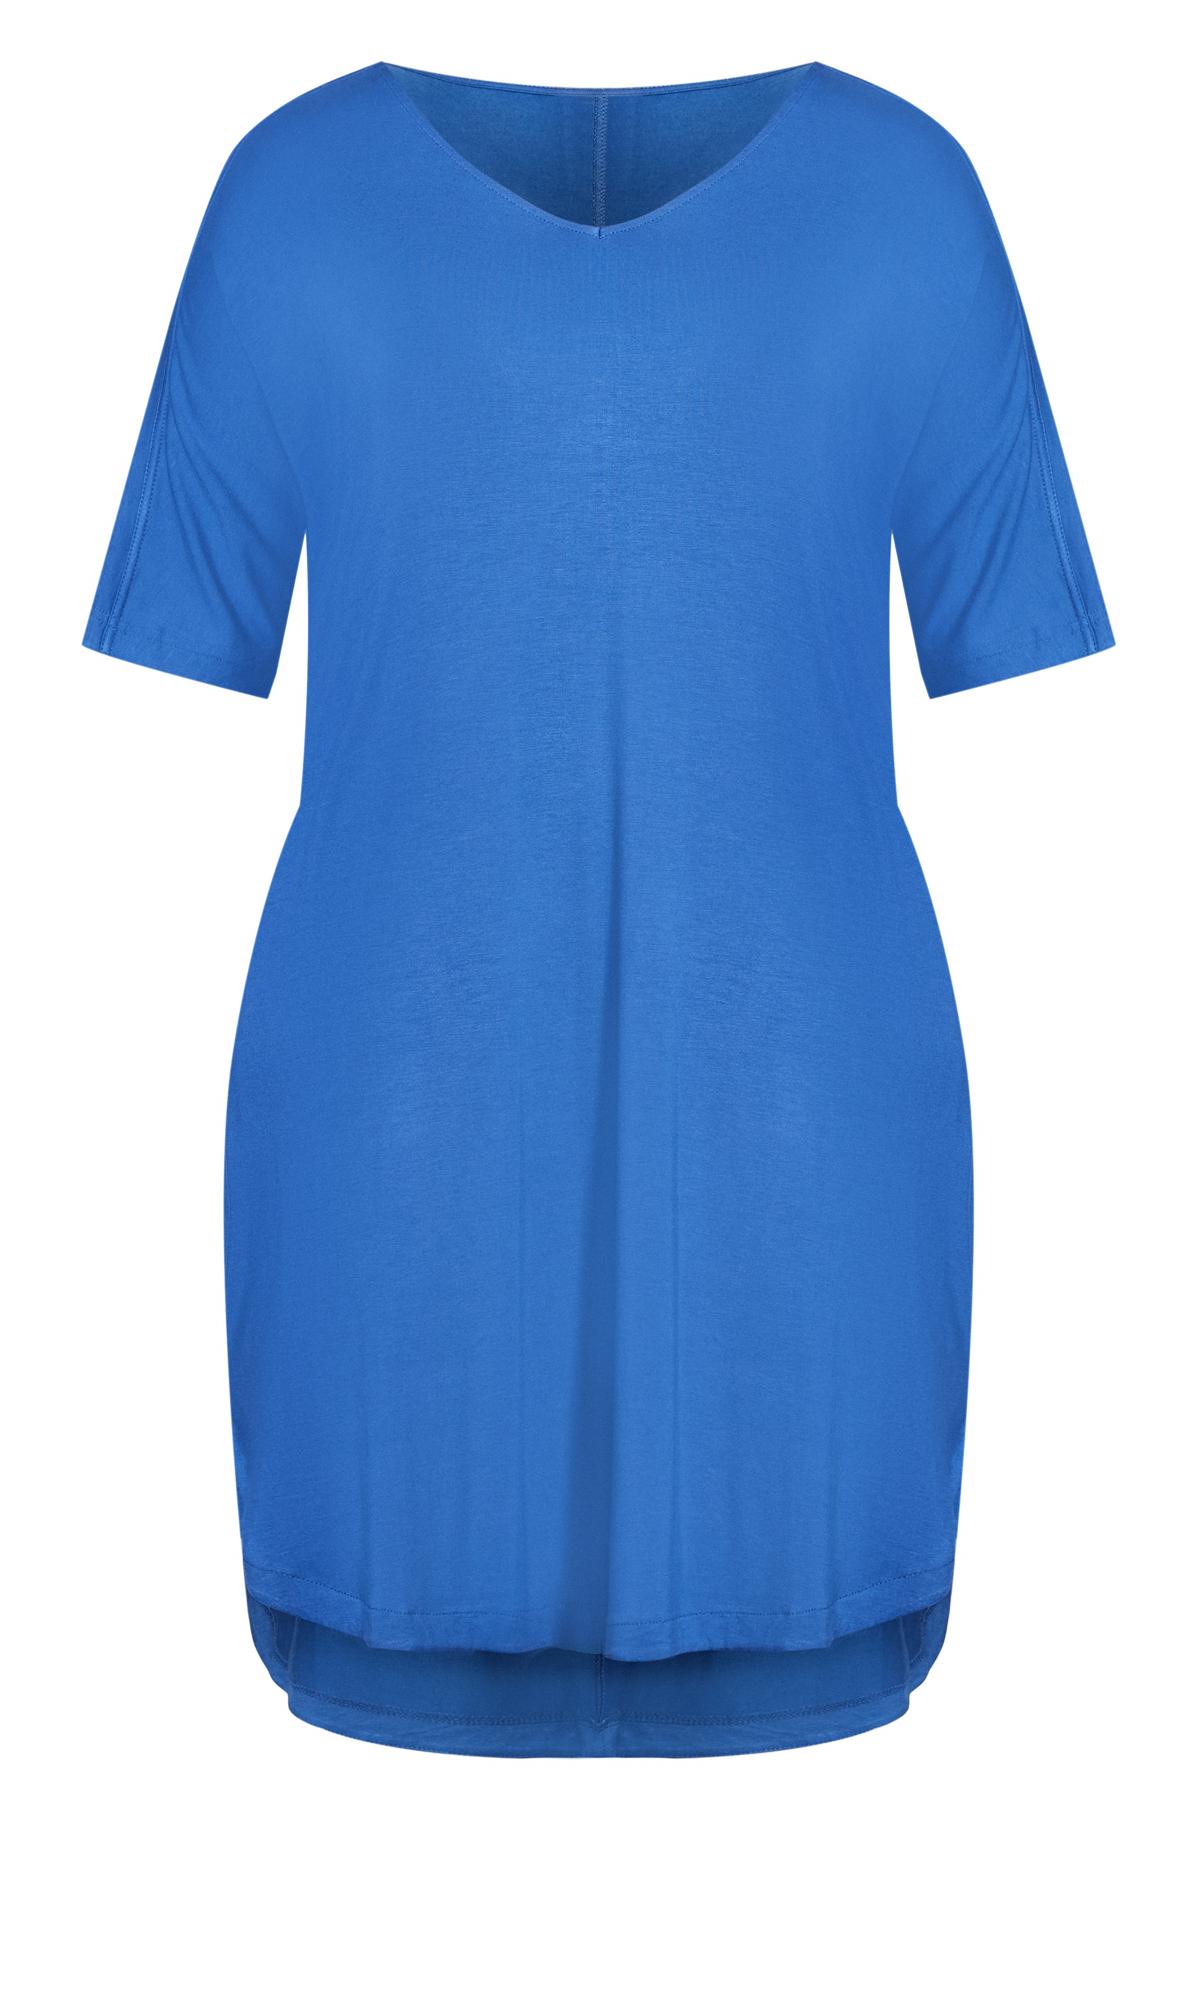 Knit Pocket Blue Plain Dress 3